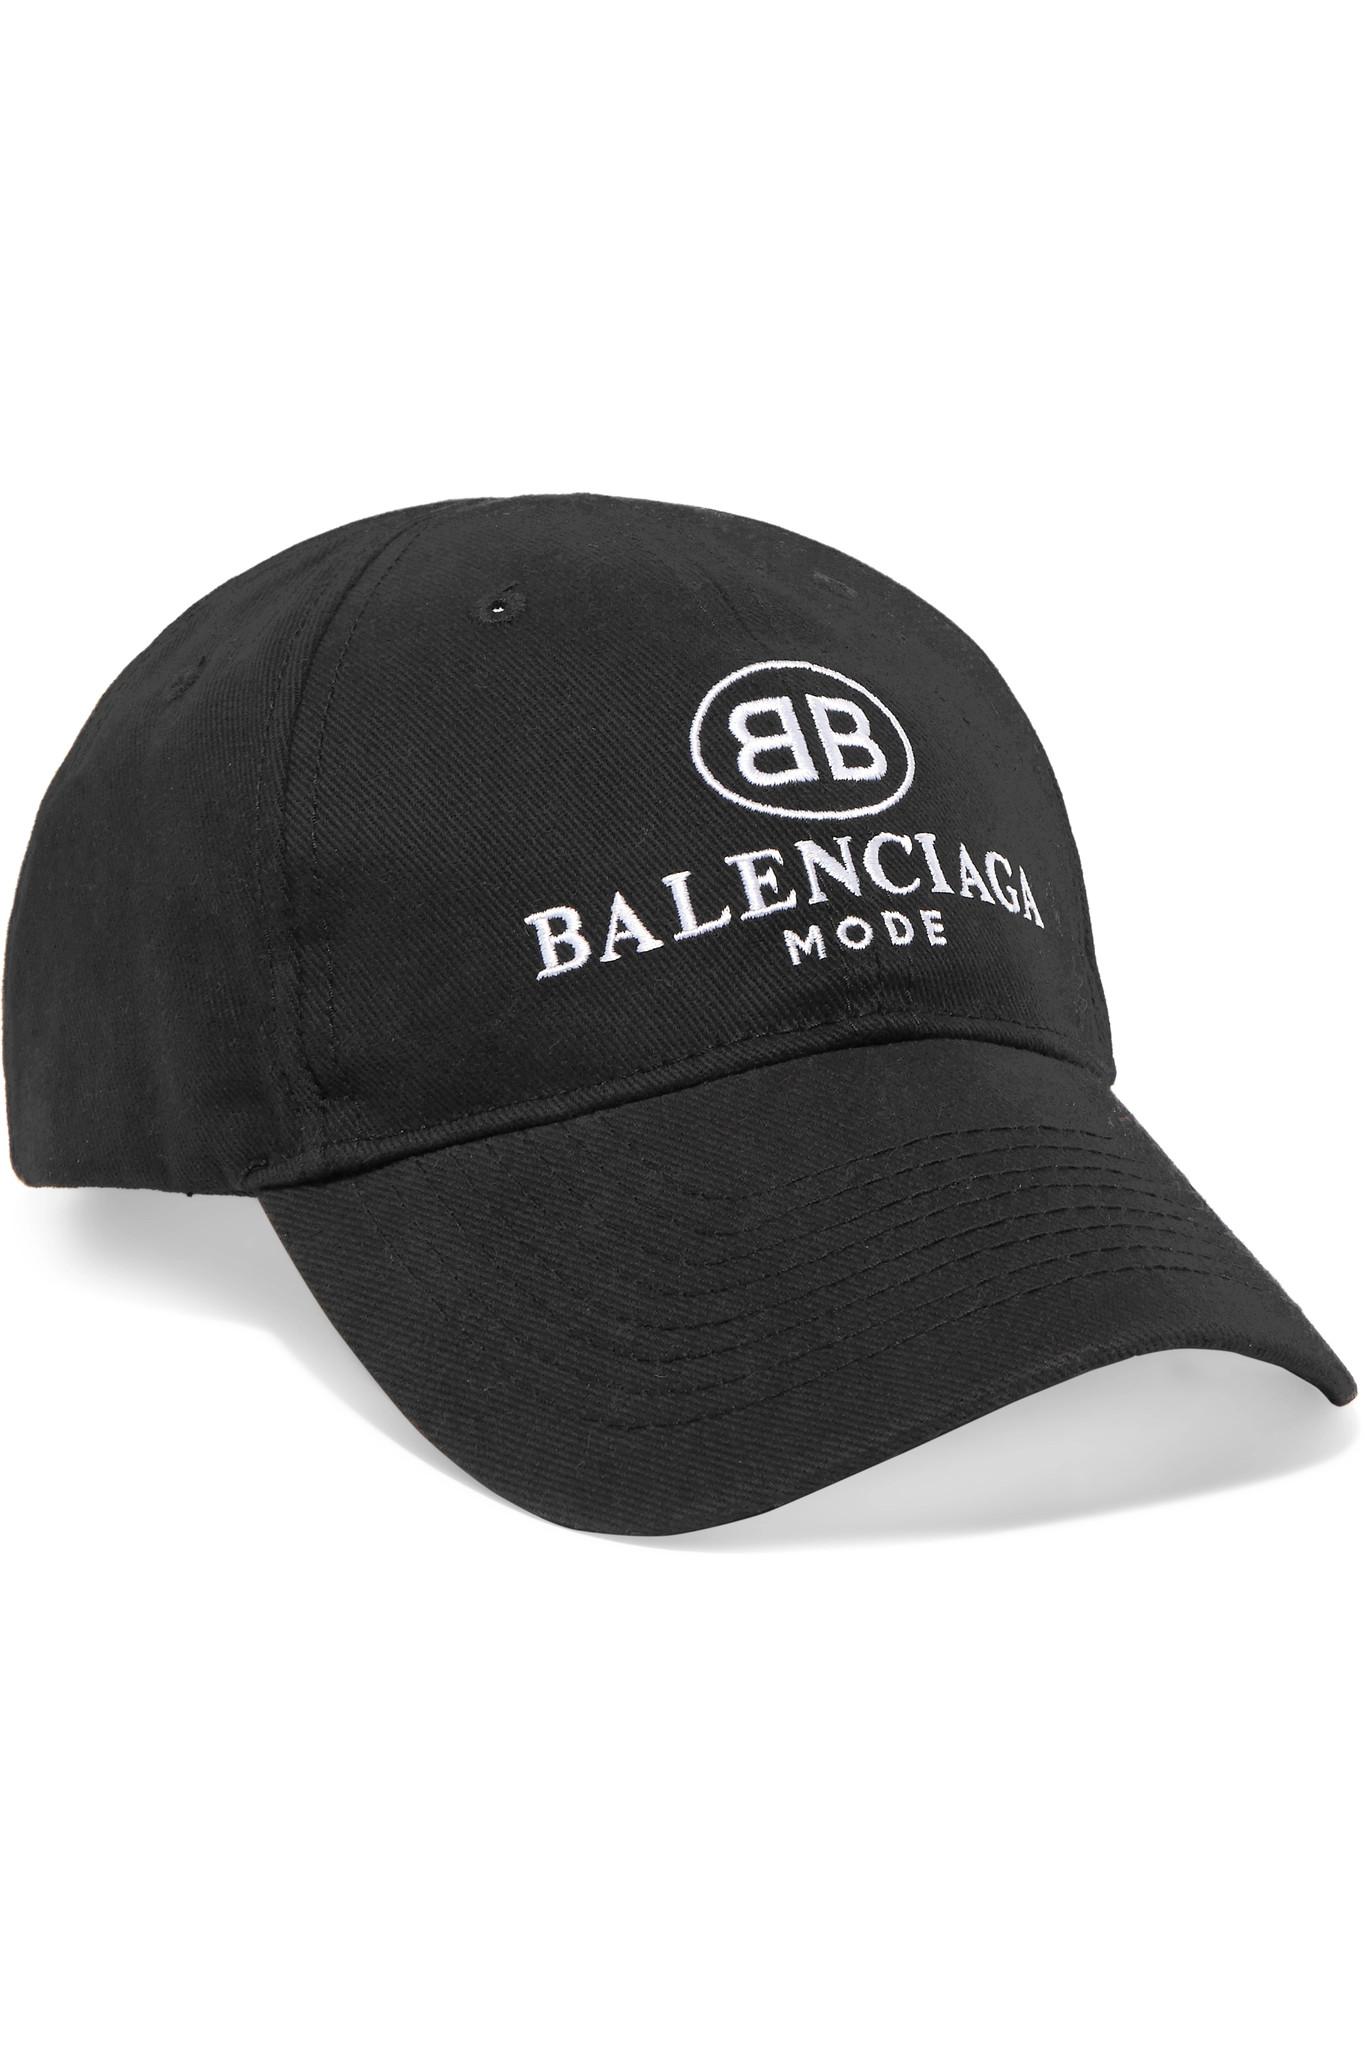 Balenciaga Embroidered Cotton-twill Baseball Cap in Black - Lyst